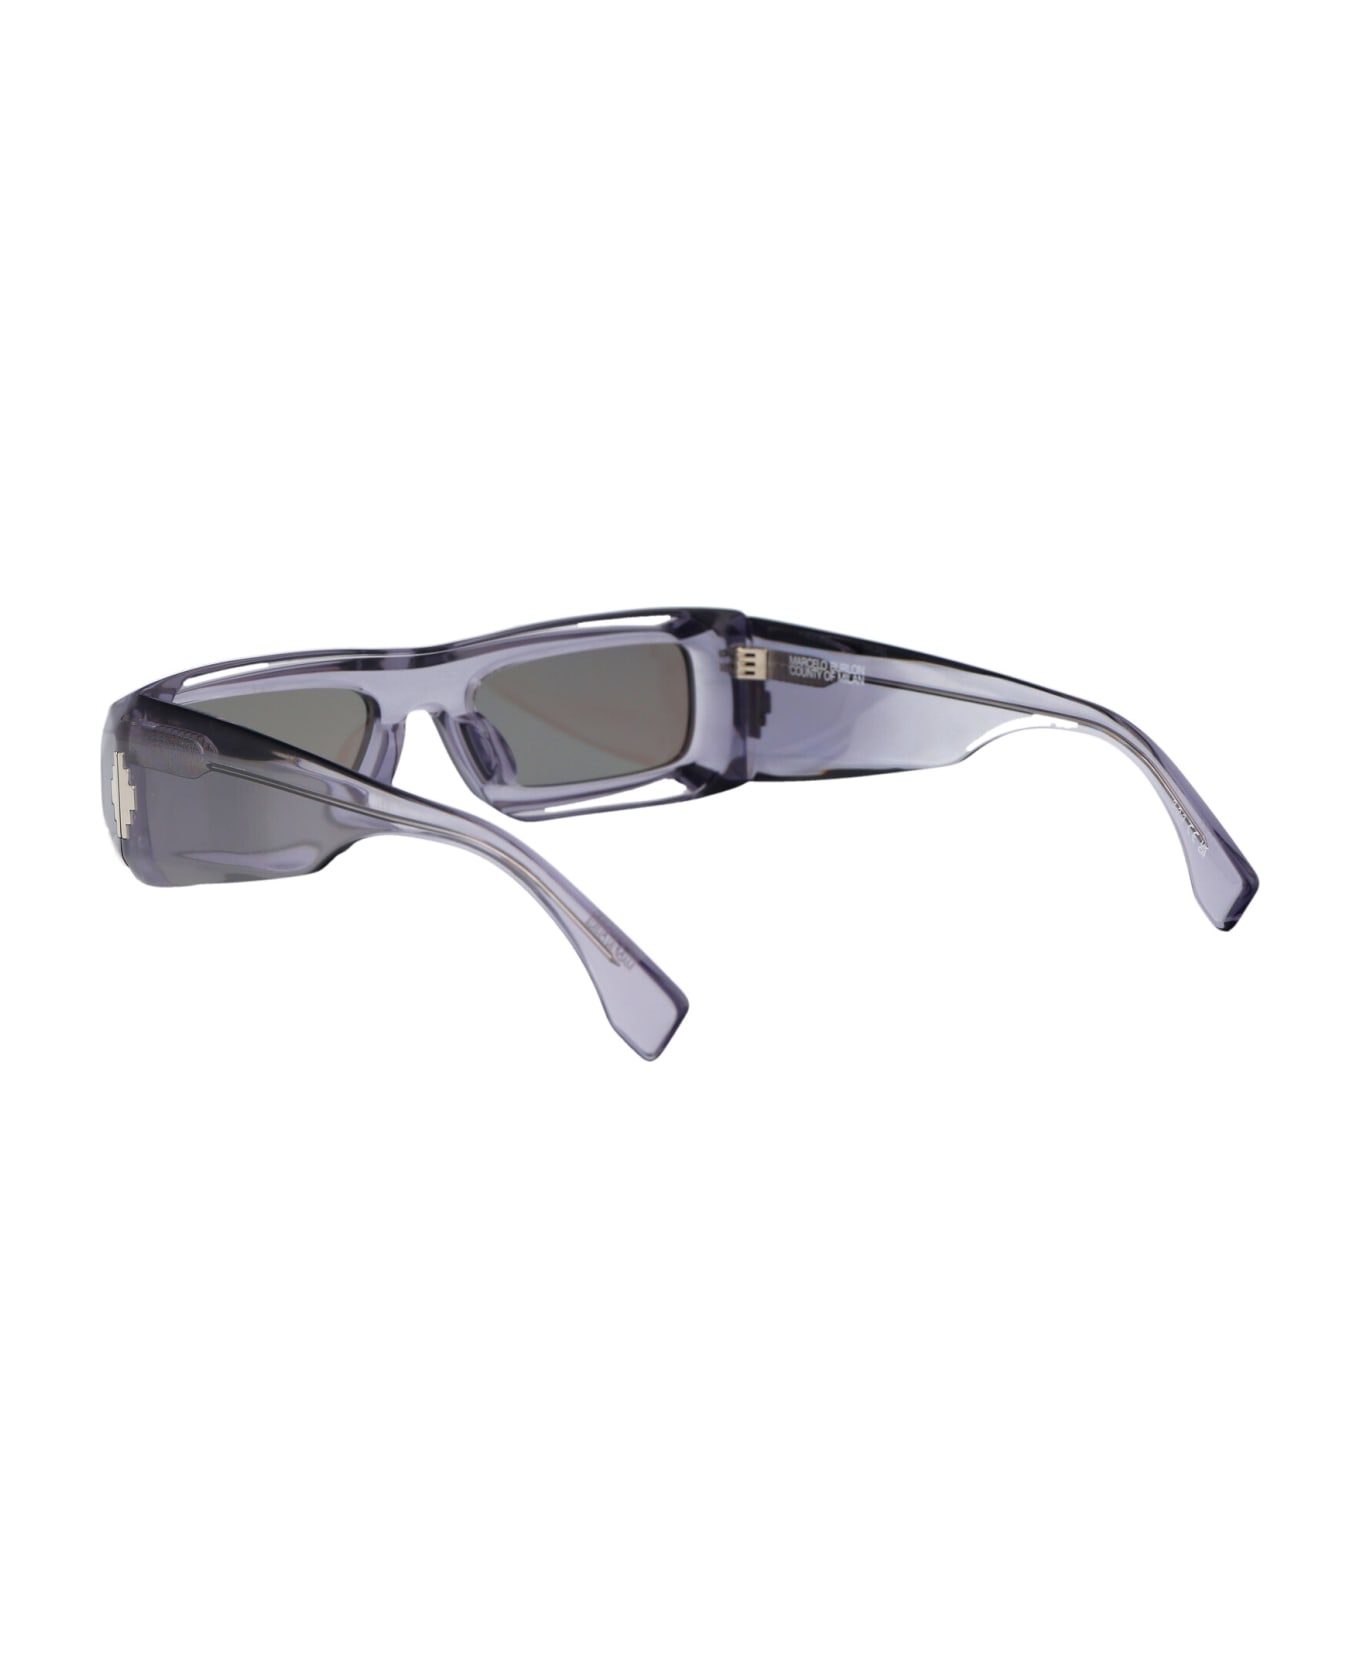 Marcelo Burlon Maqui Sunglasses - 0972 GREY MIRROR SILVER サングラス